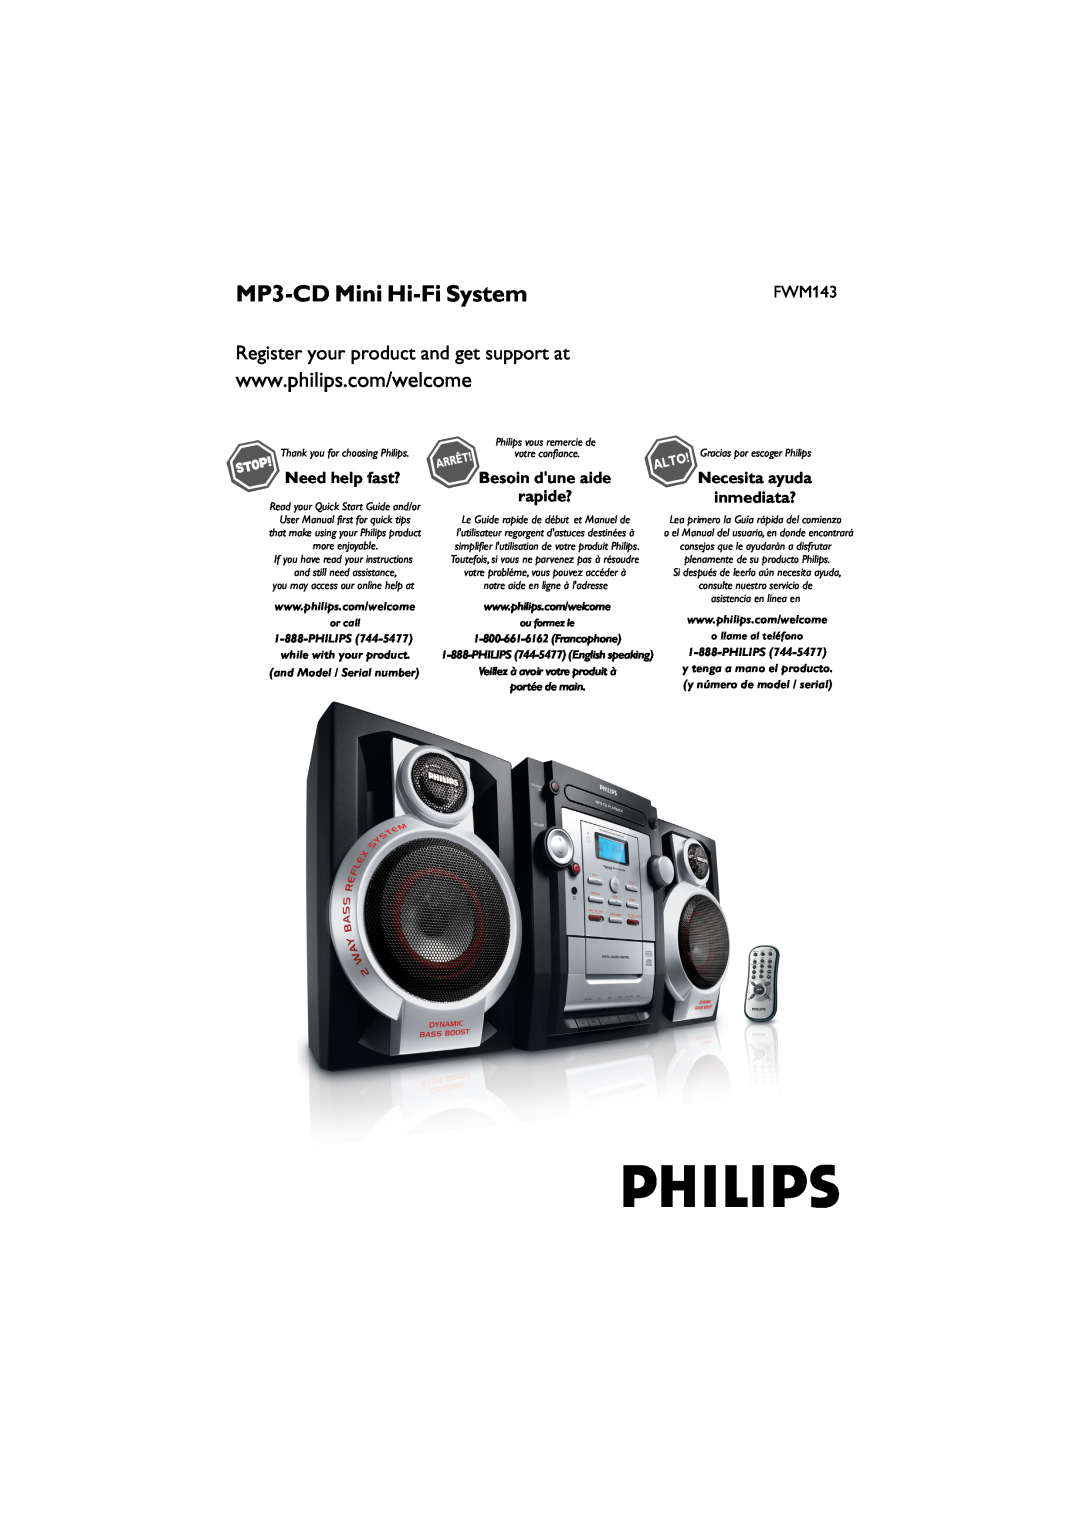 Philips FWM143/37 quick start MP3-CDMini Hi-FiSystem, Register your product and get support at, Necesita ayuda inmediata? 